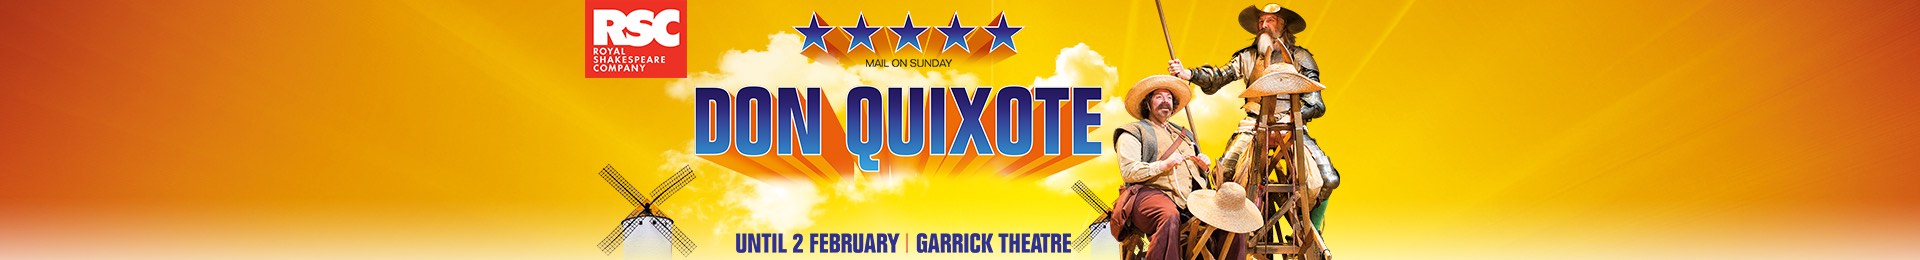 Don Quixote banner image